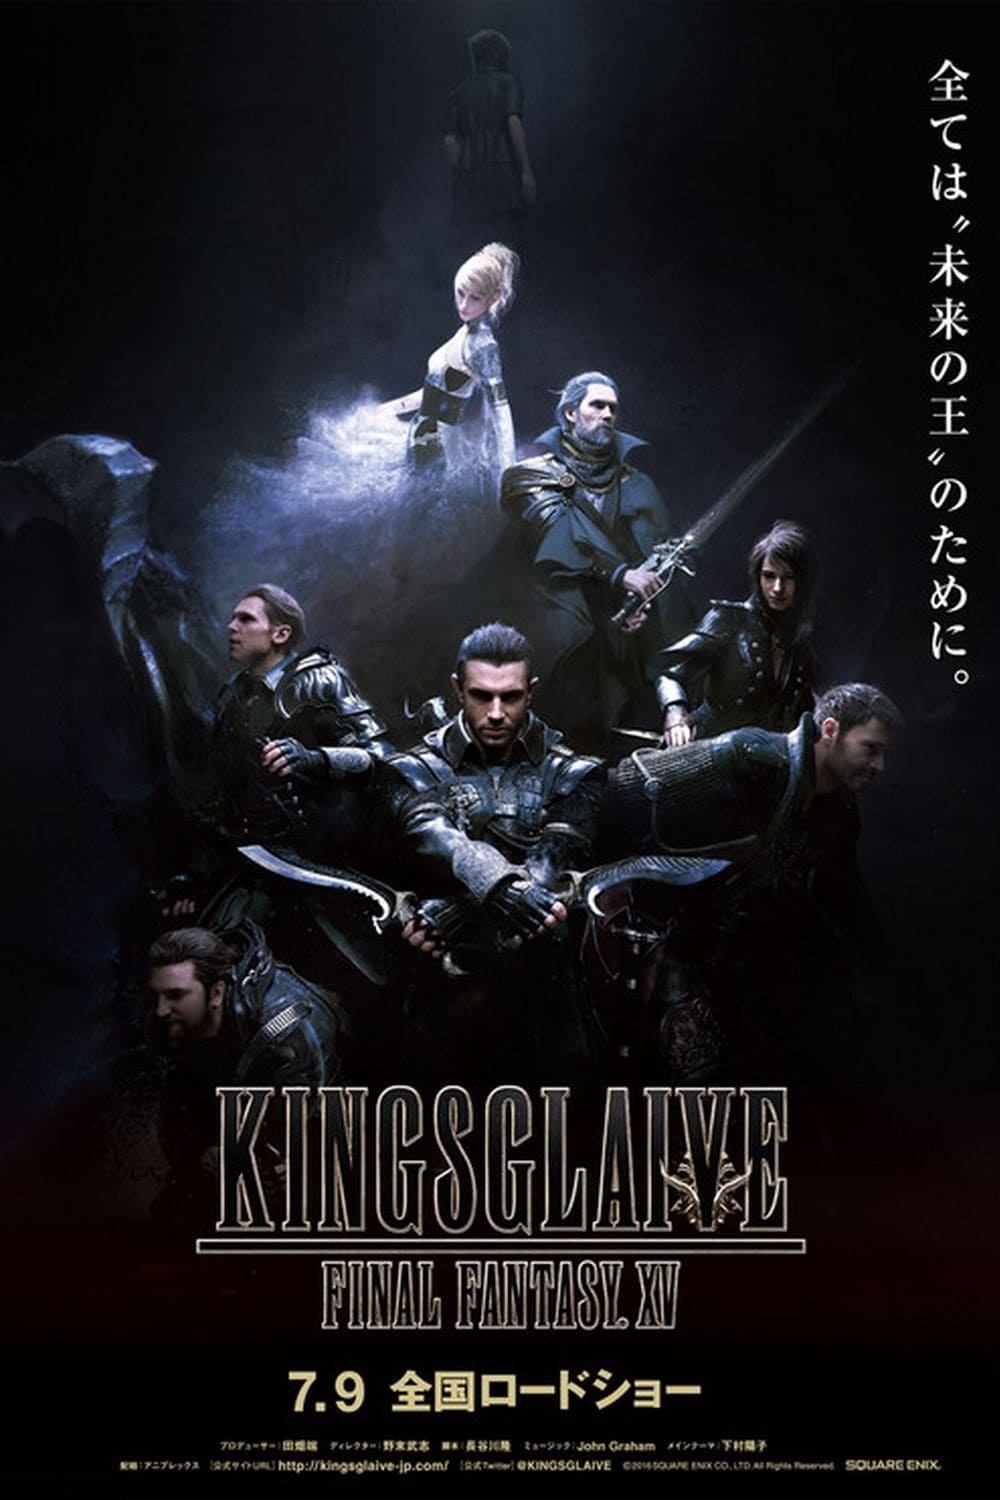 Plakat von "Kingsglaive: Final Fantasy XV"